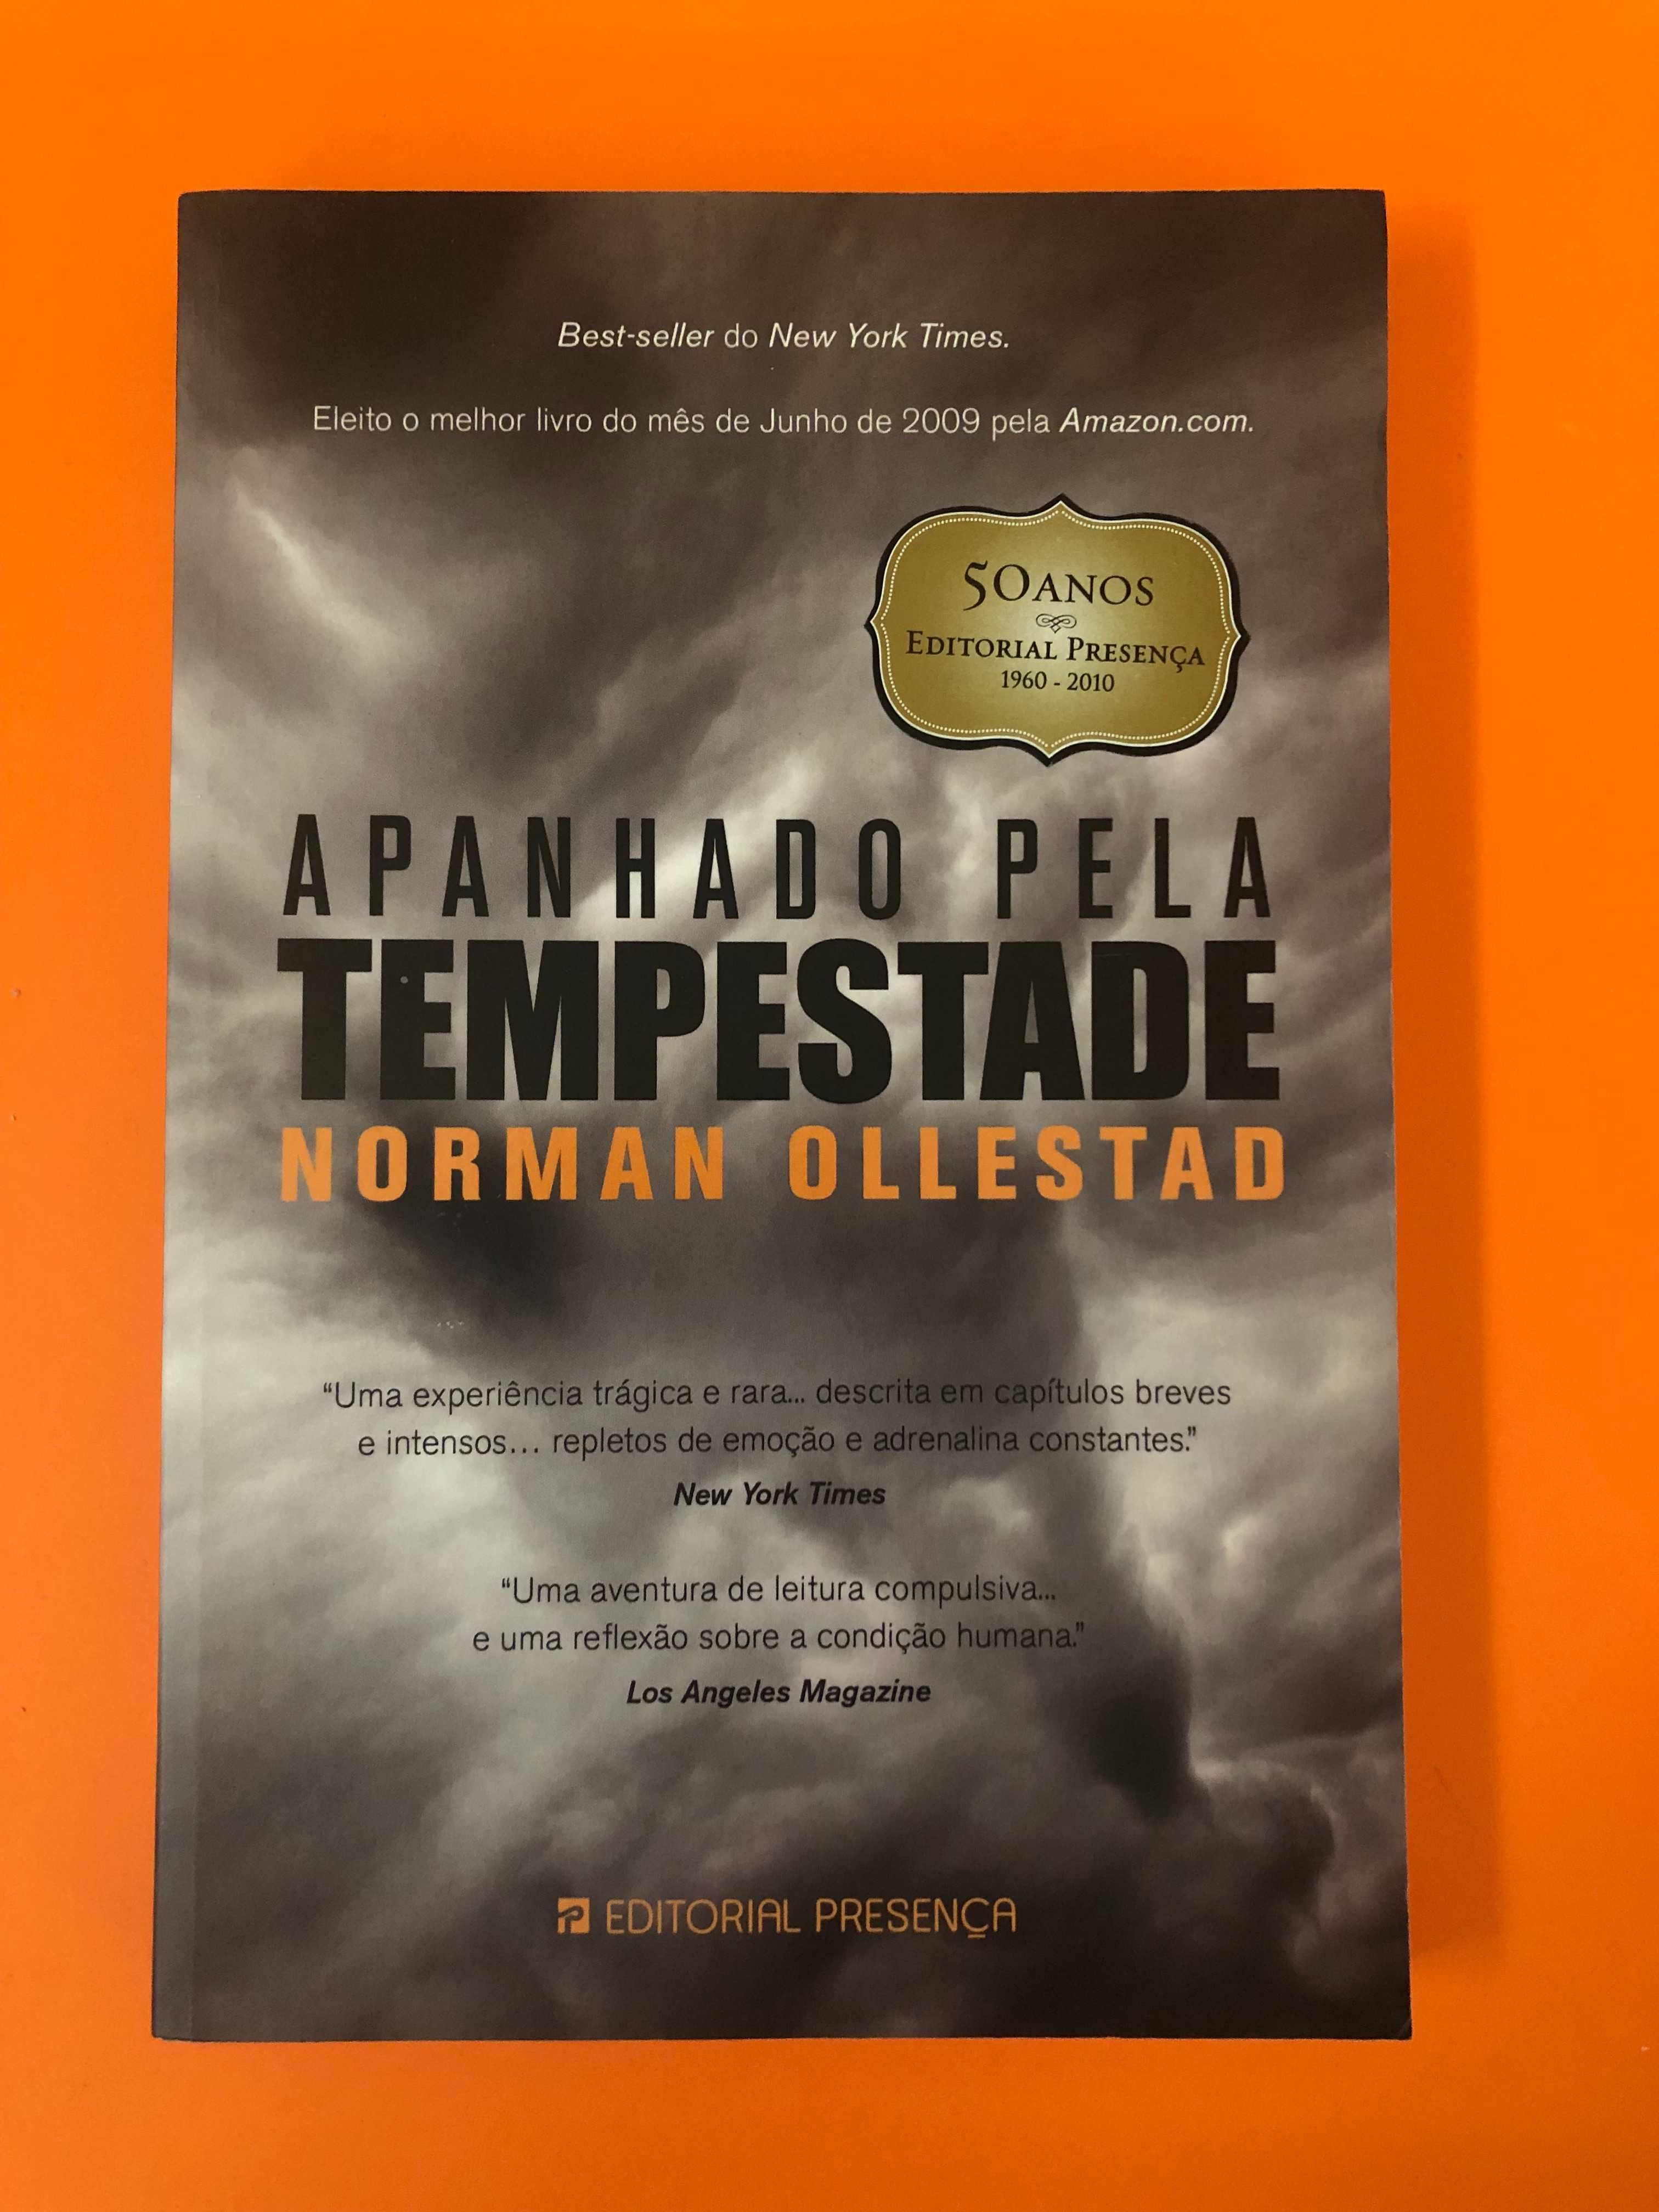 Apanhado pela tempestade - Norman Ollestad (História verídica)